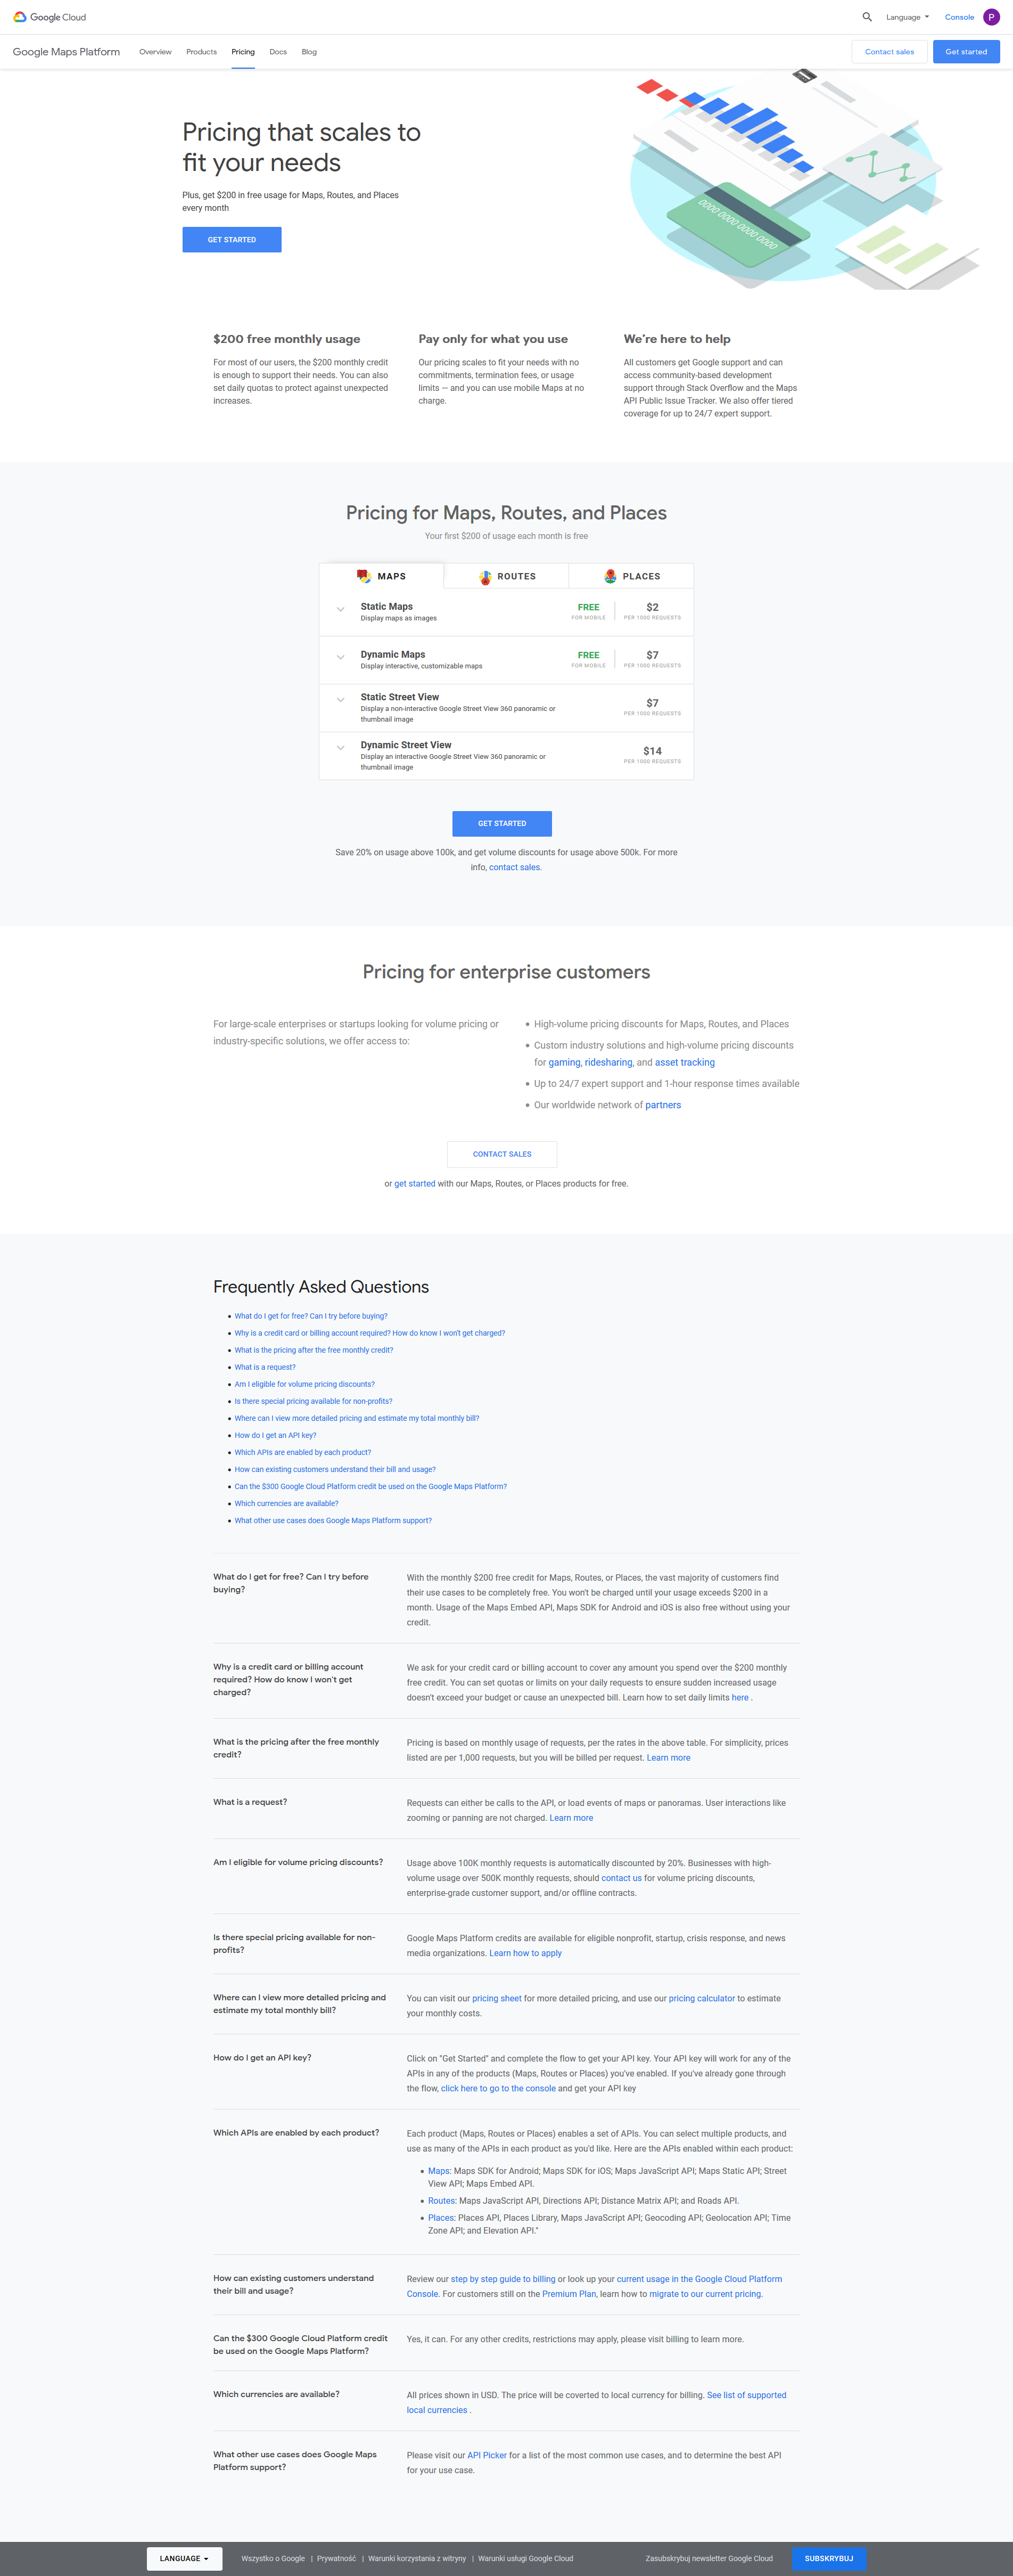 Google Cloud Platform: strona główna